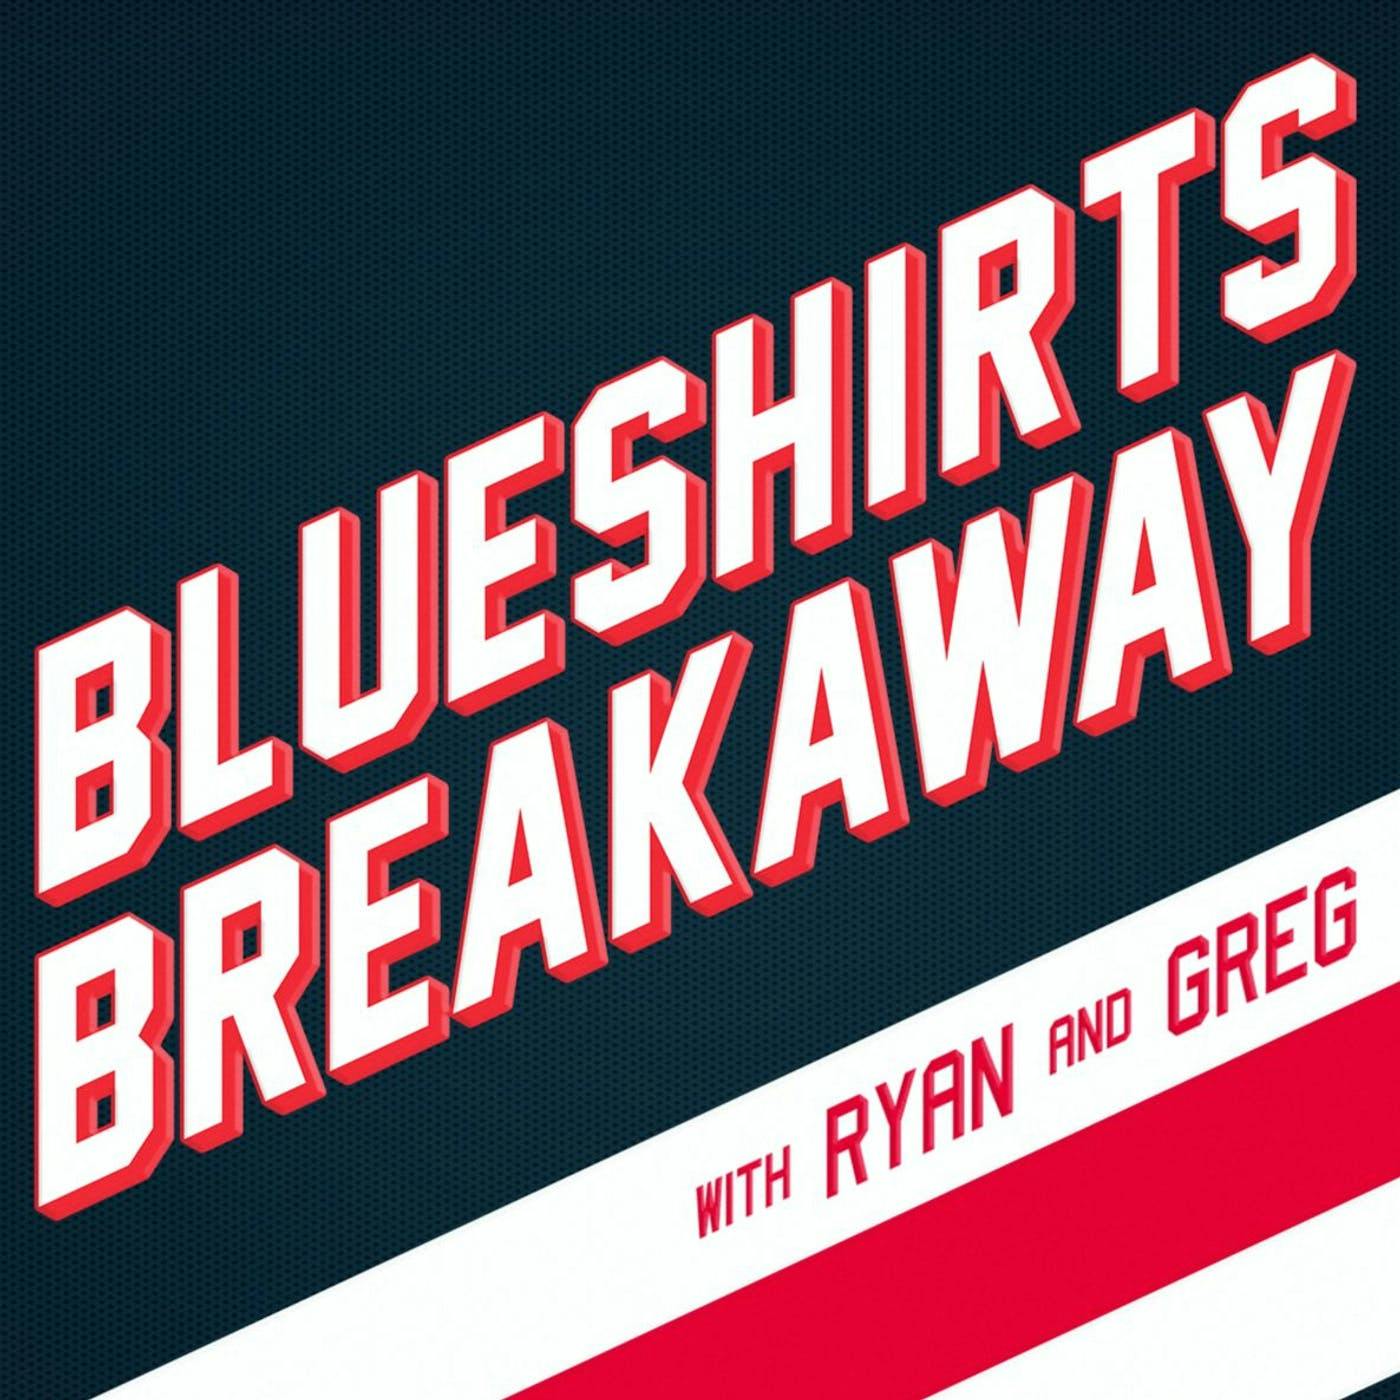 Blueshirts Breakaway Bonus - NFL Playoffs with Bryan Woktanik